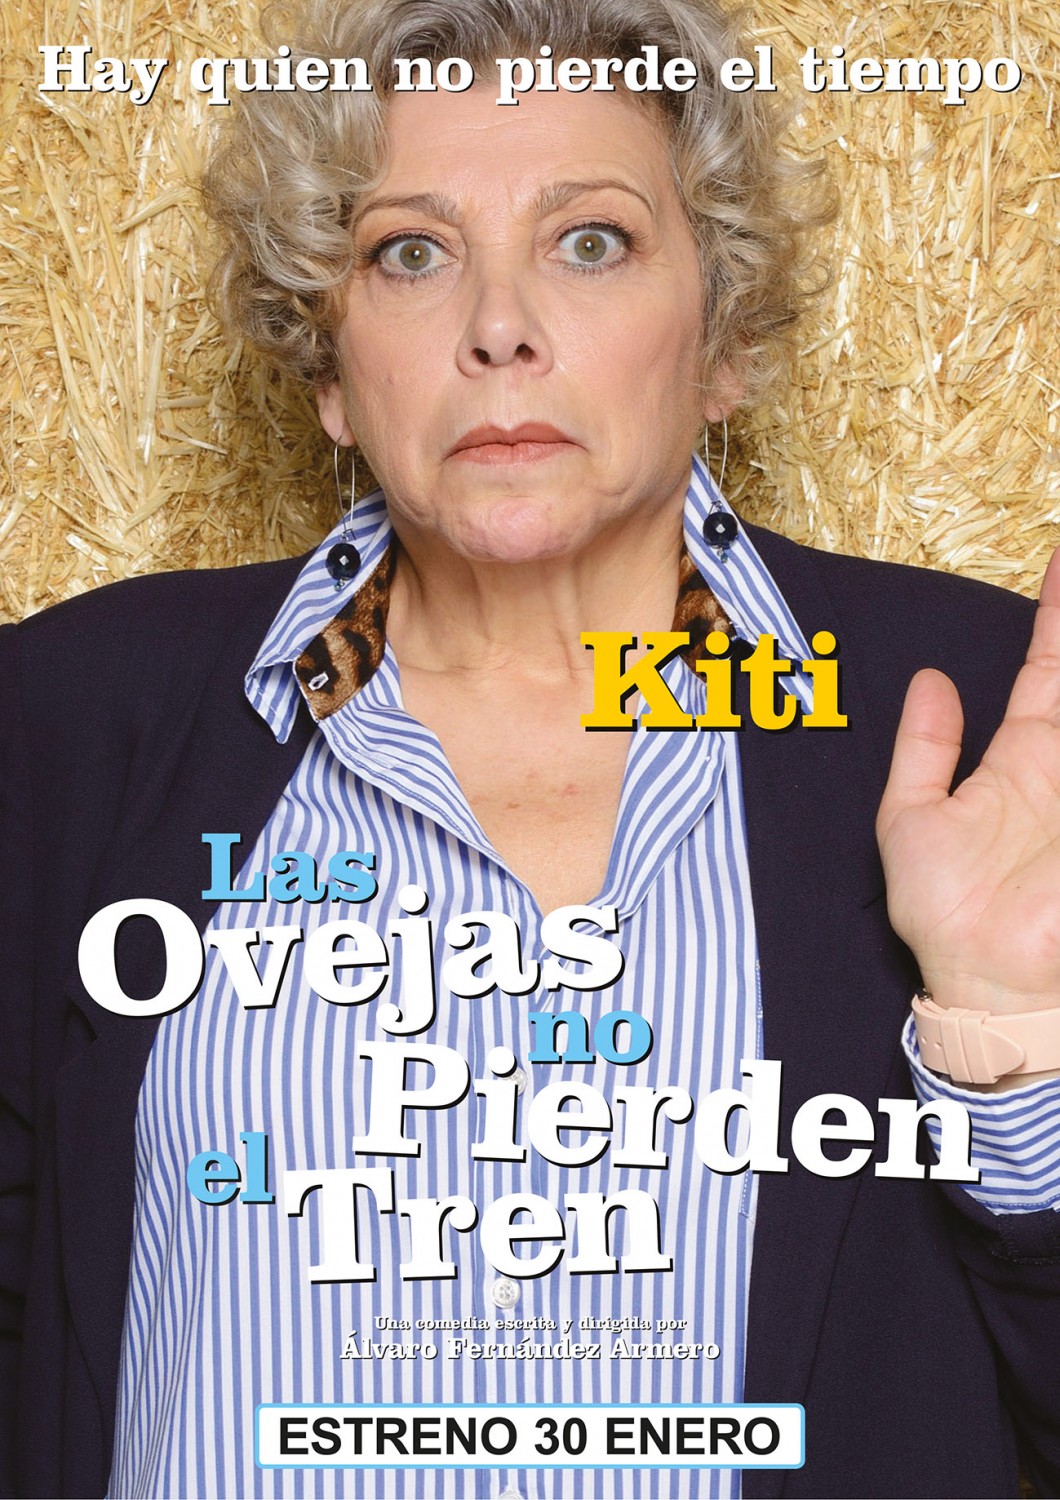 Extra Large Movie Poster Image for Las ovejas no pierden el tren (#3 of 7)